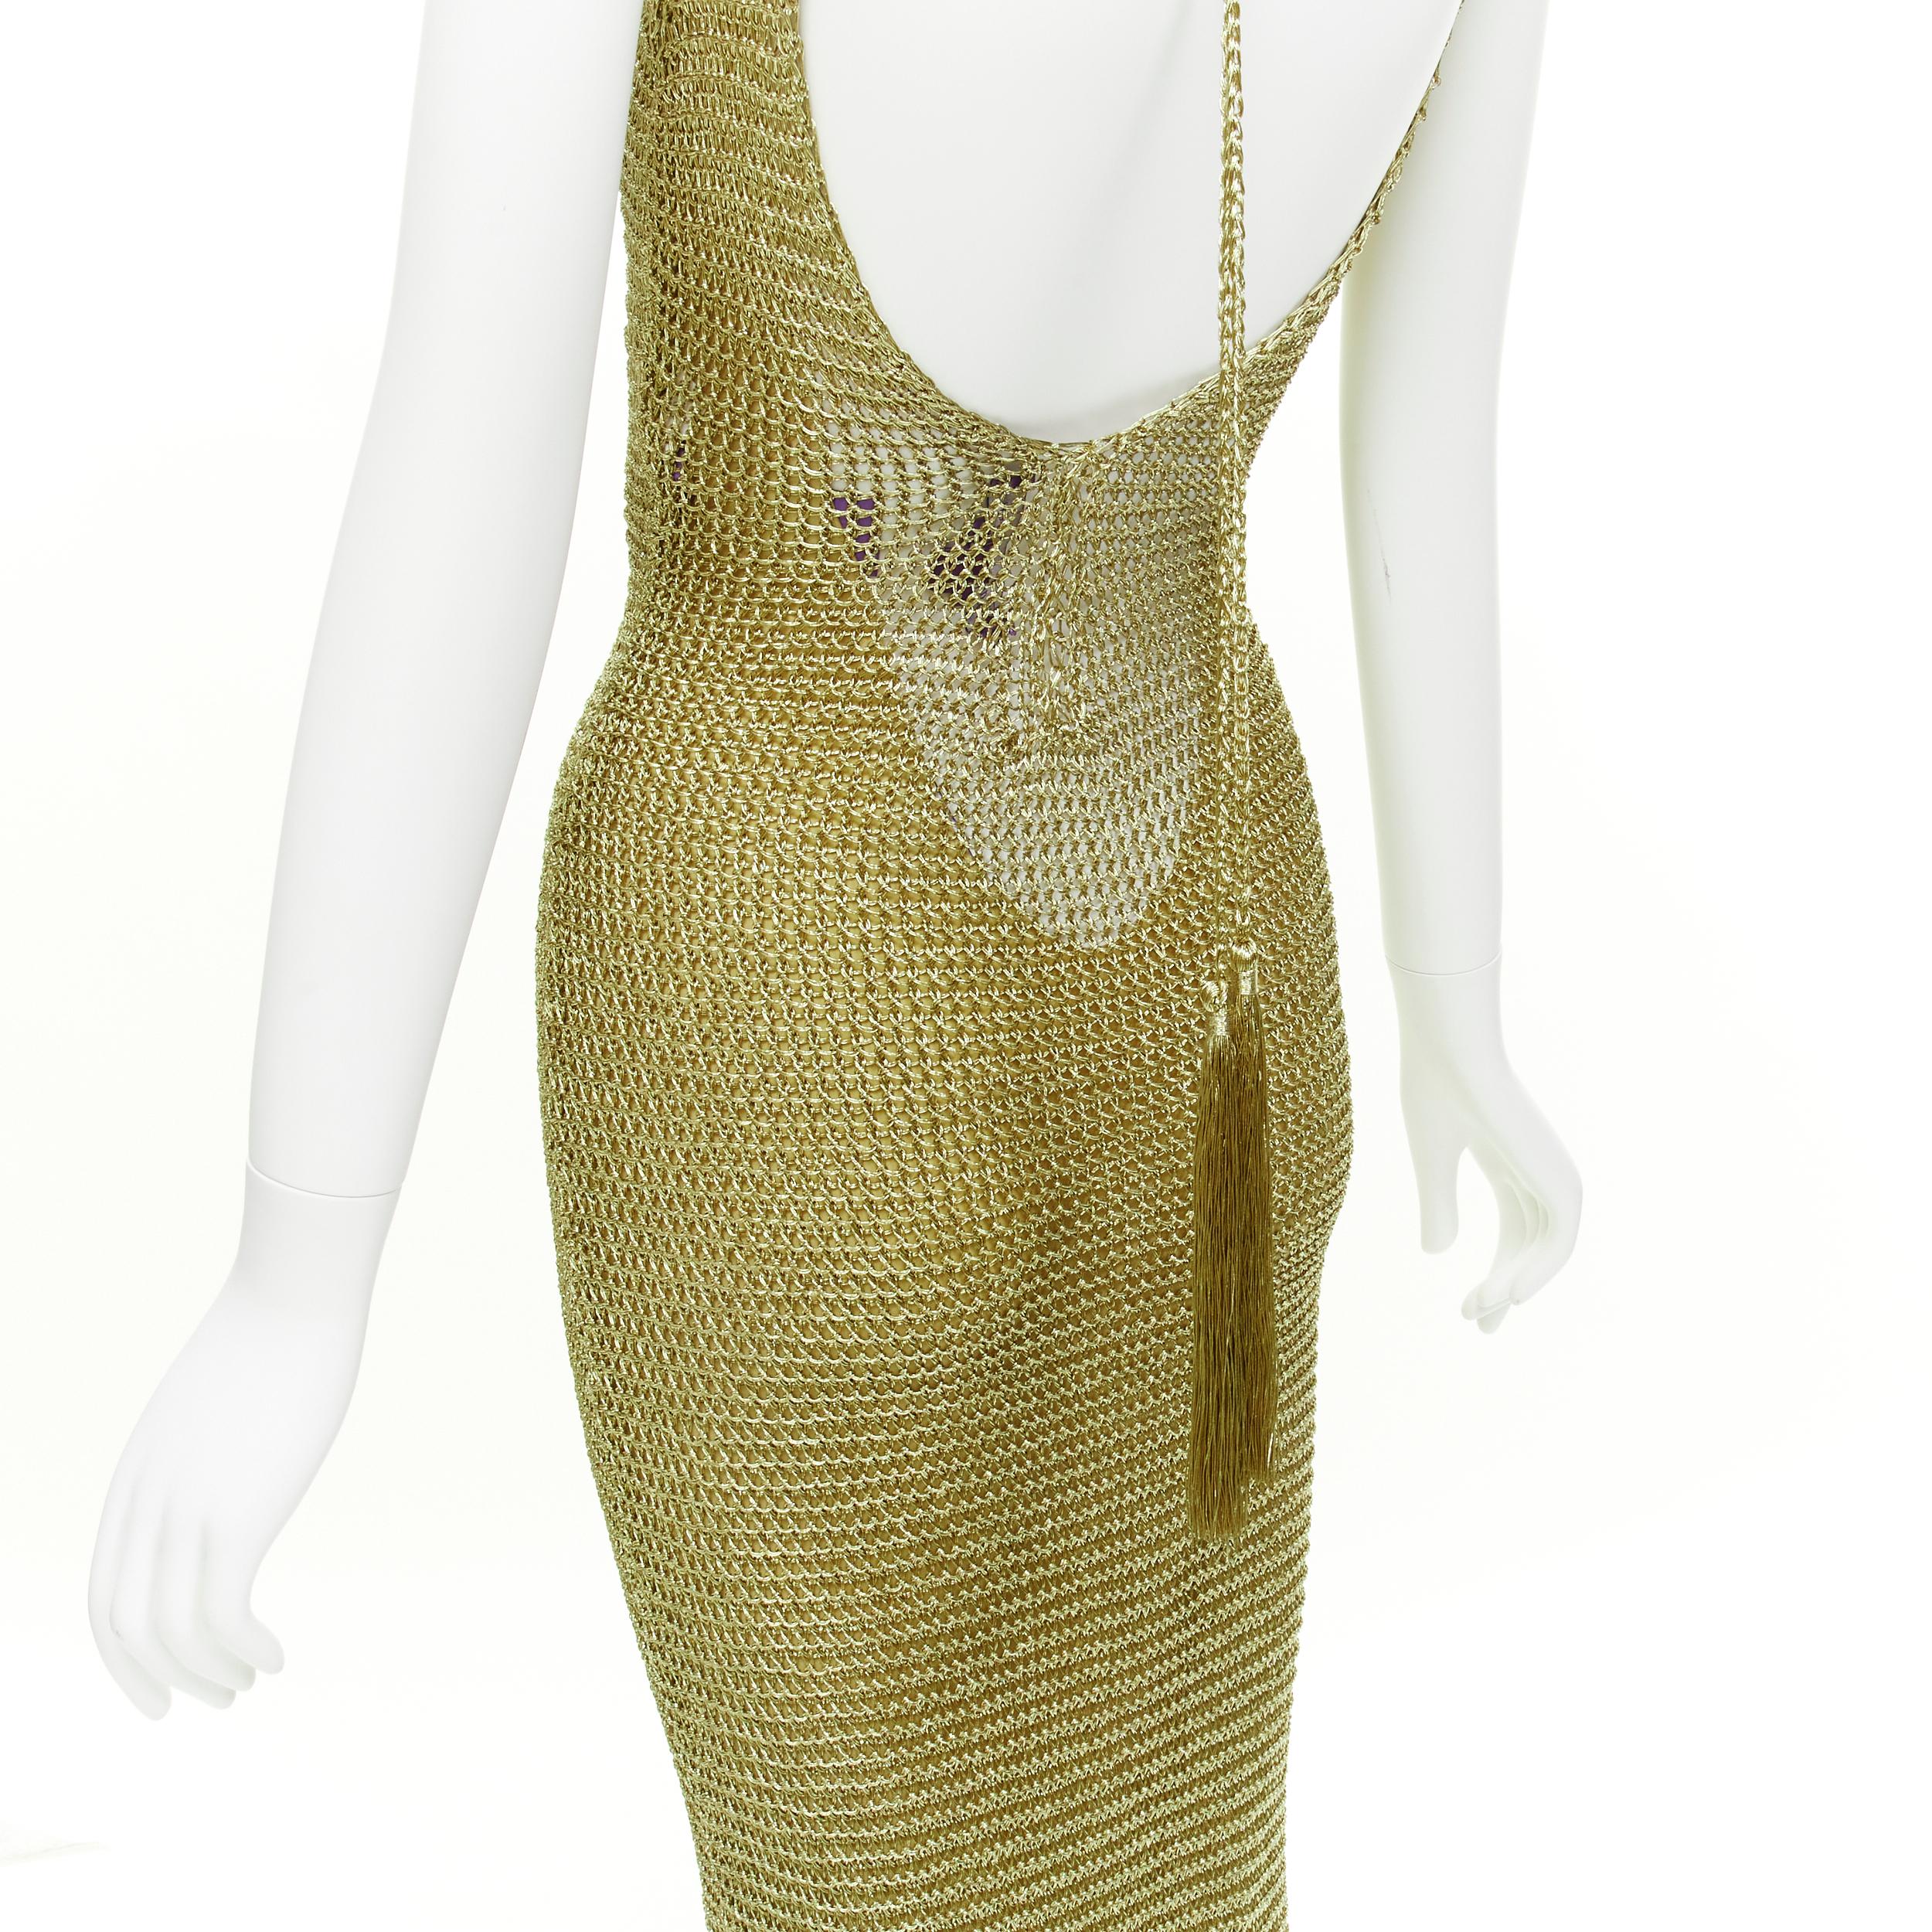 RALPH LAUREN PURPLE LABEL hand knit gold tassel crochet midi evening gown dress  For Sale 6